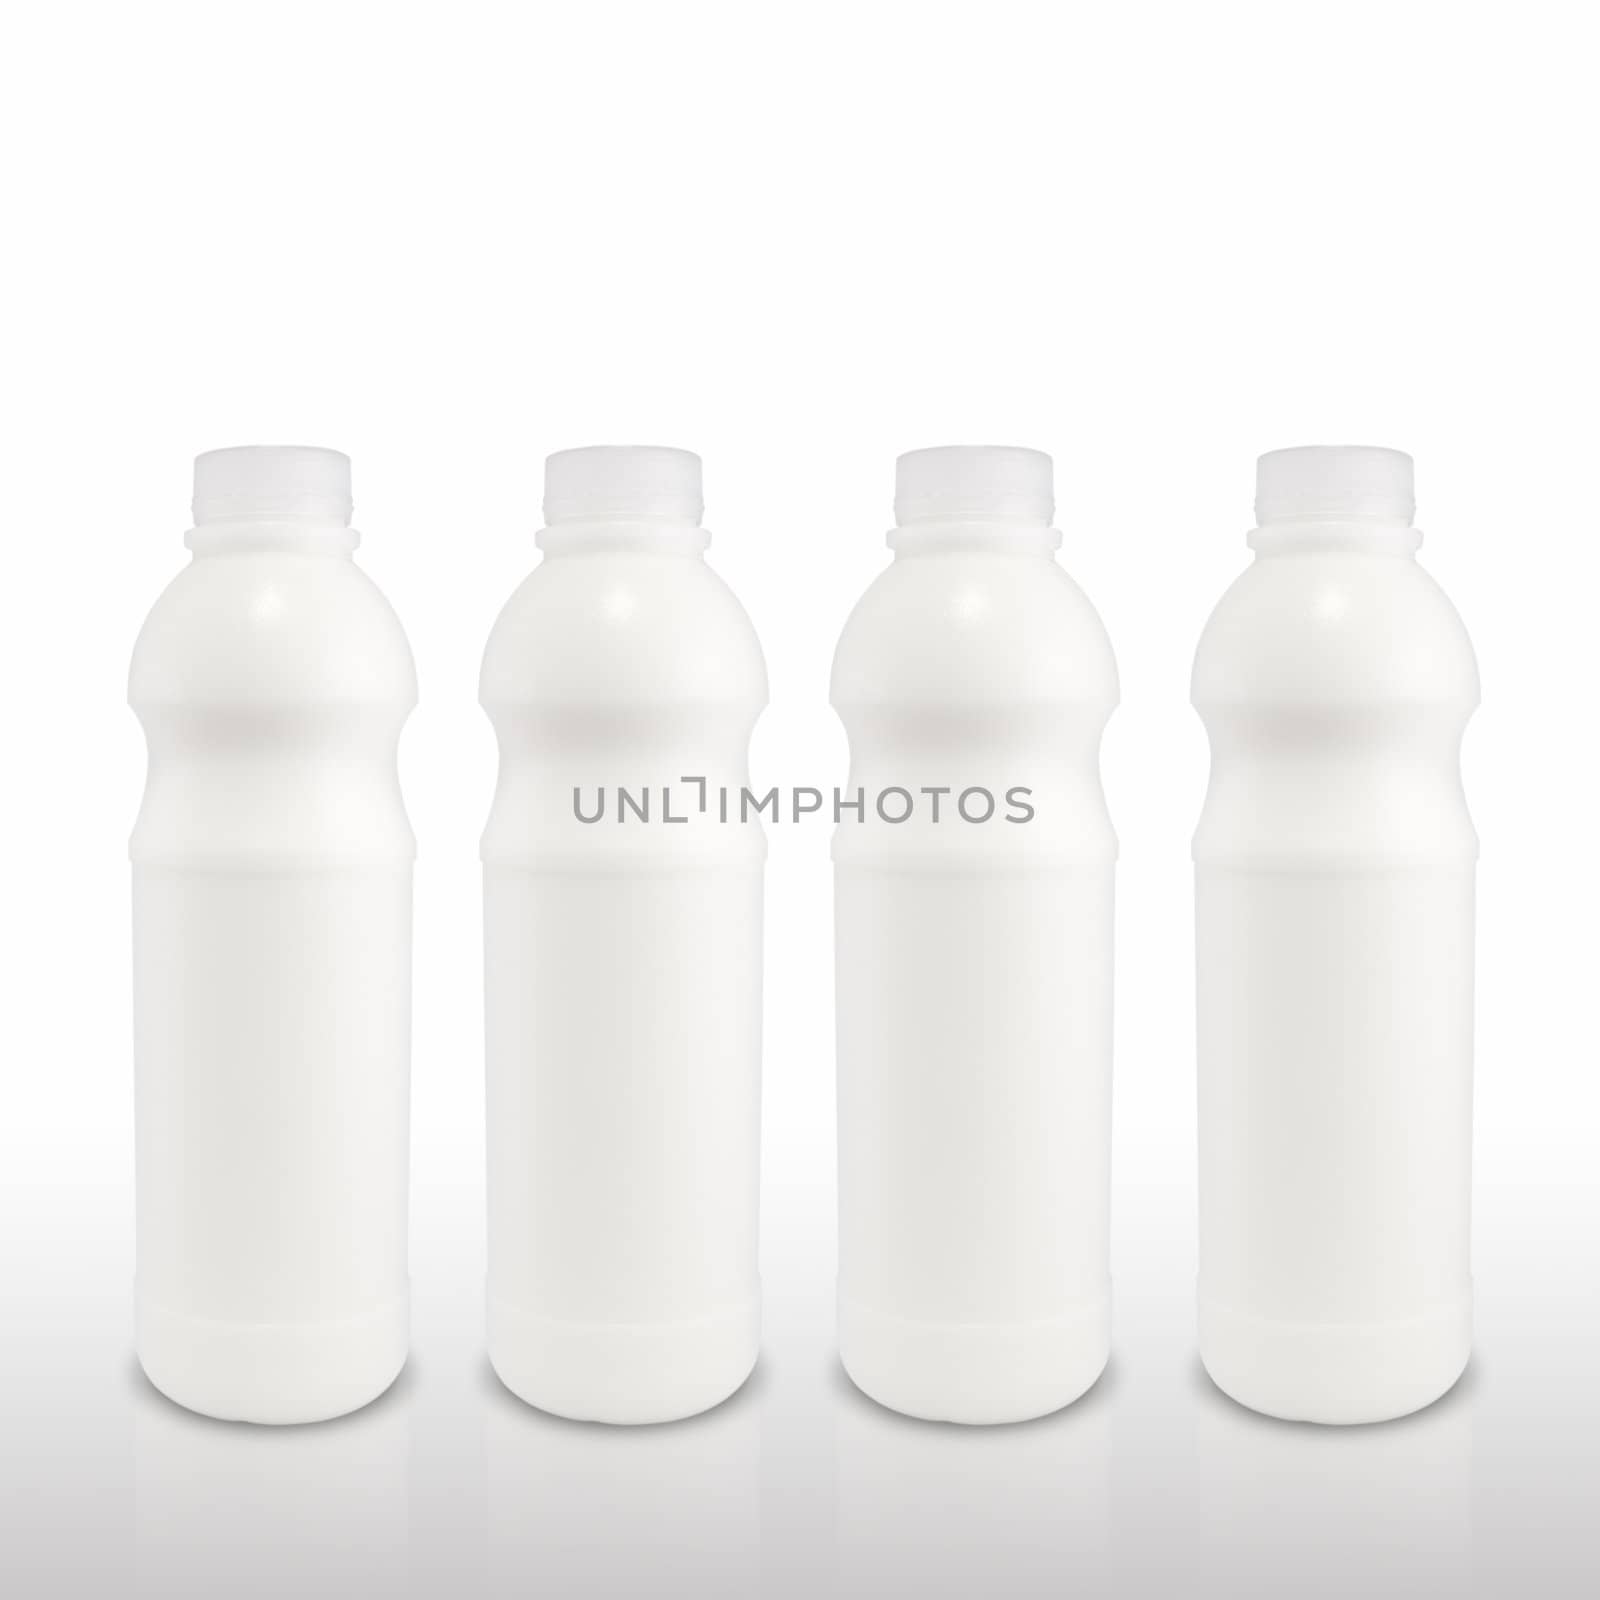 Milk in plastic bottles, Healthy drinks